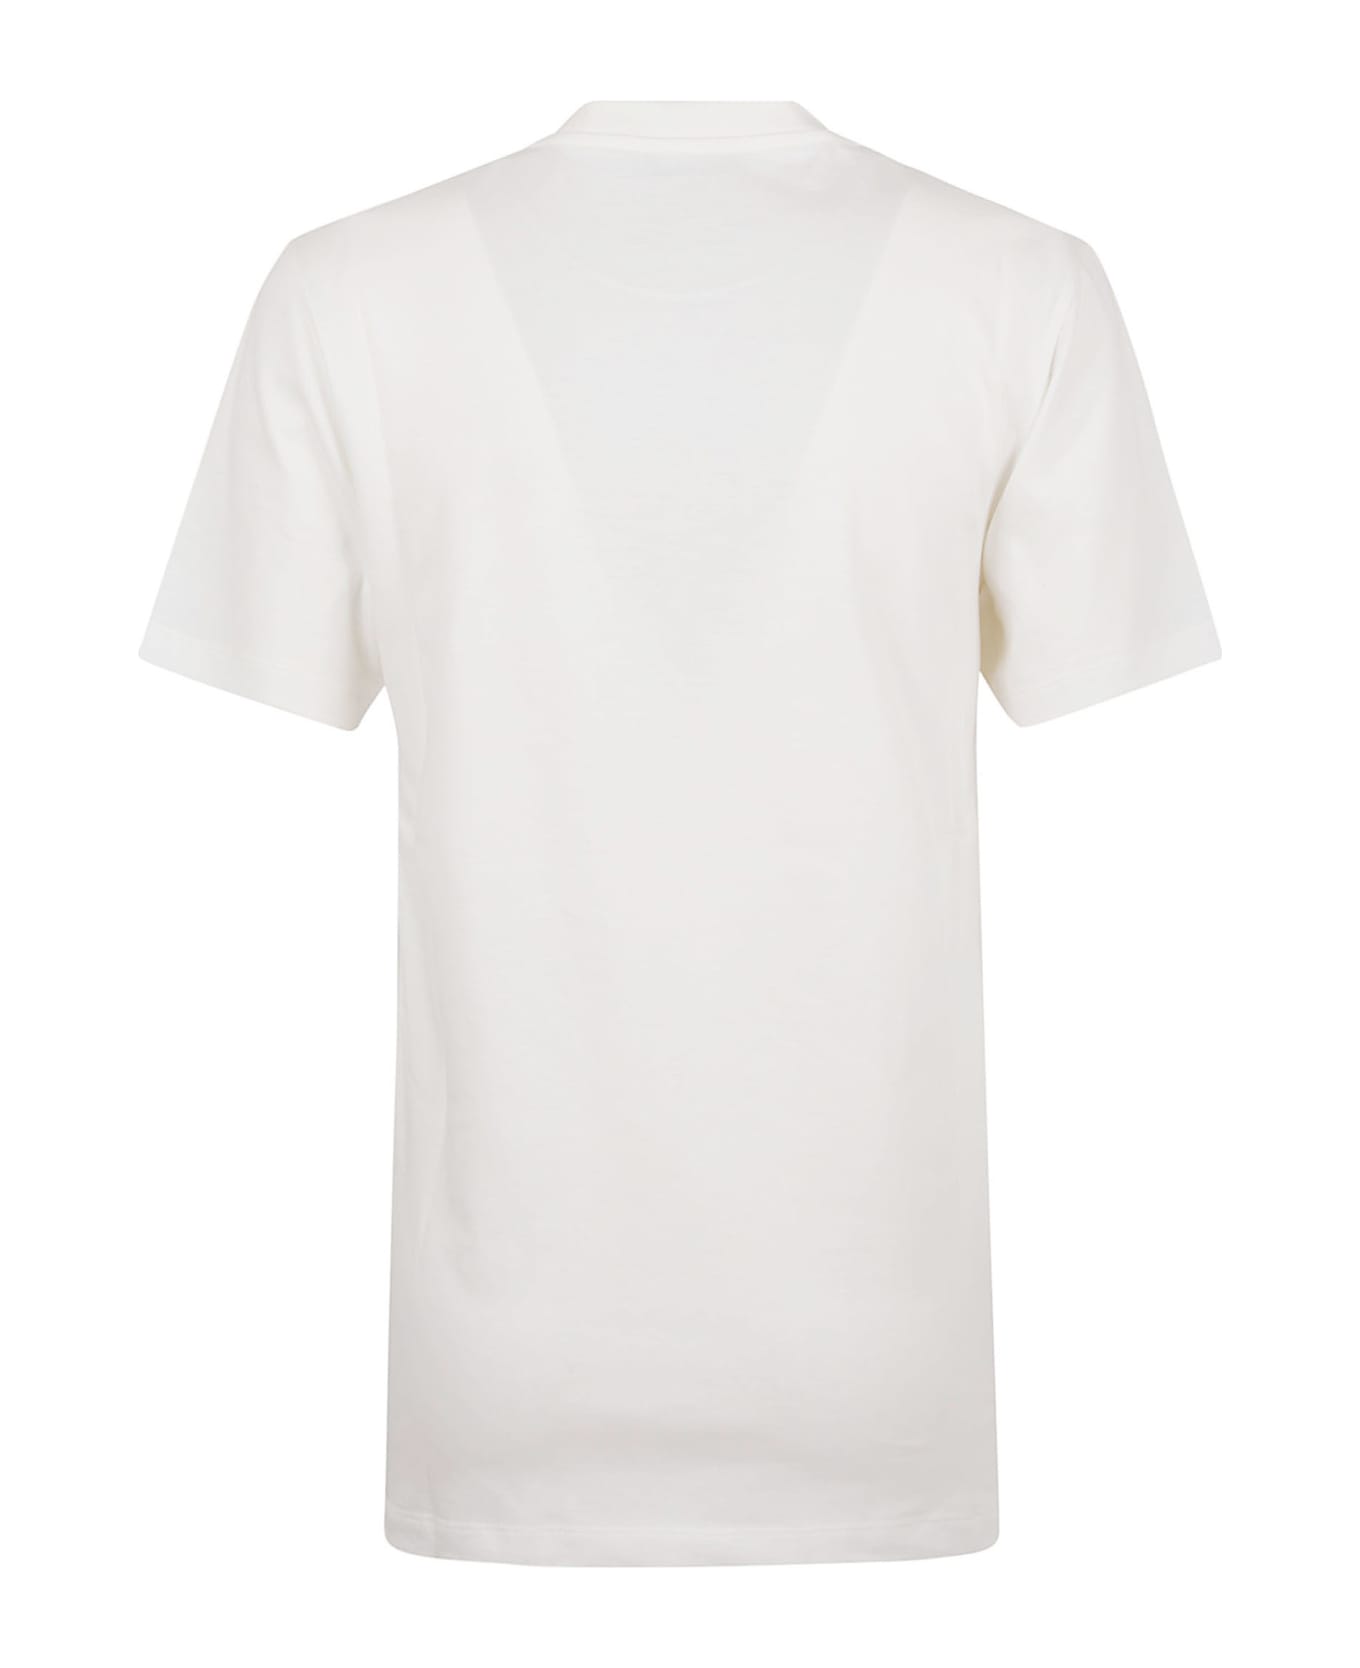 Paco Rabanne Tee Shirt - Coconut Milk Tシャツ